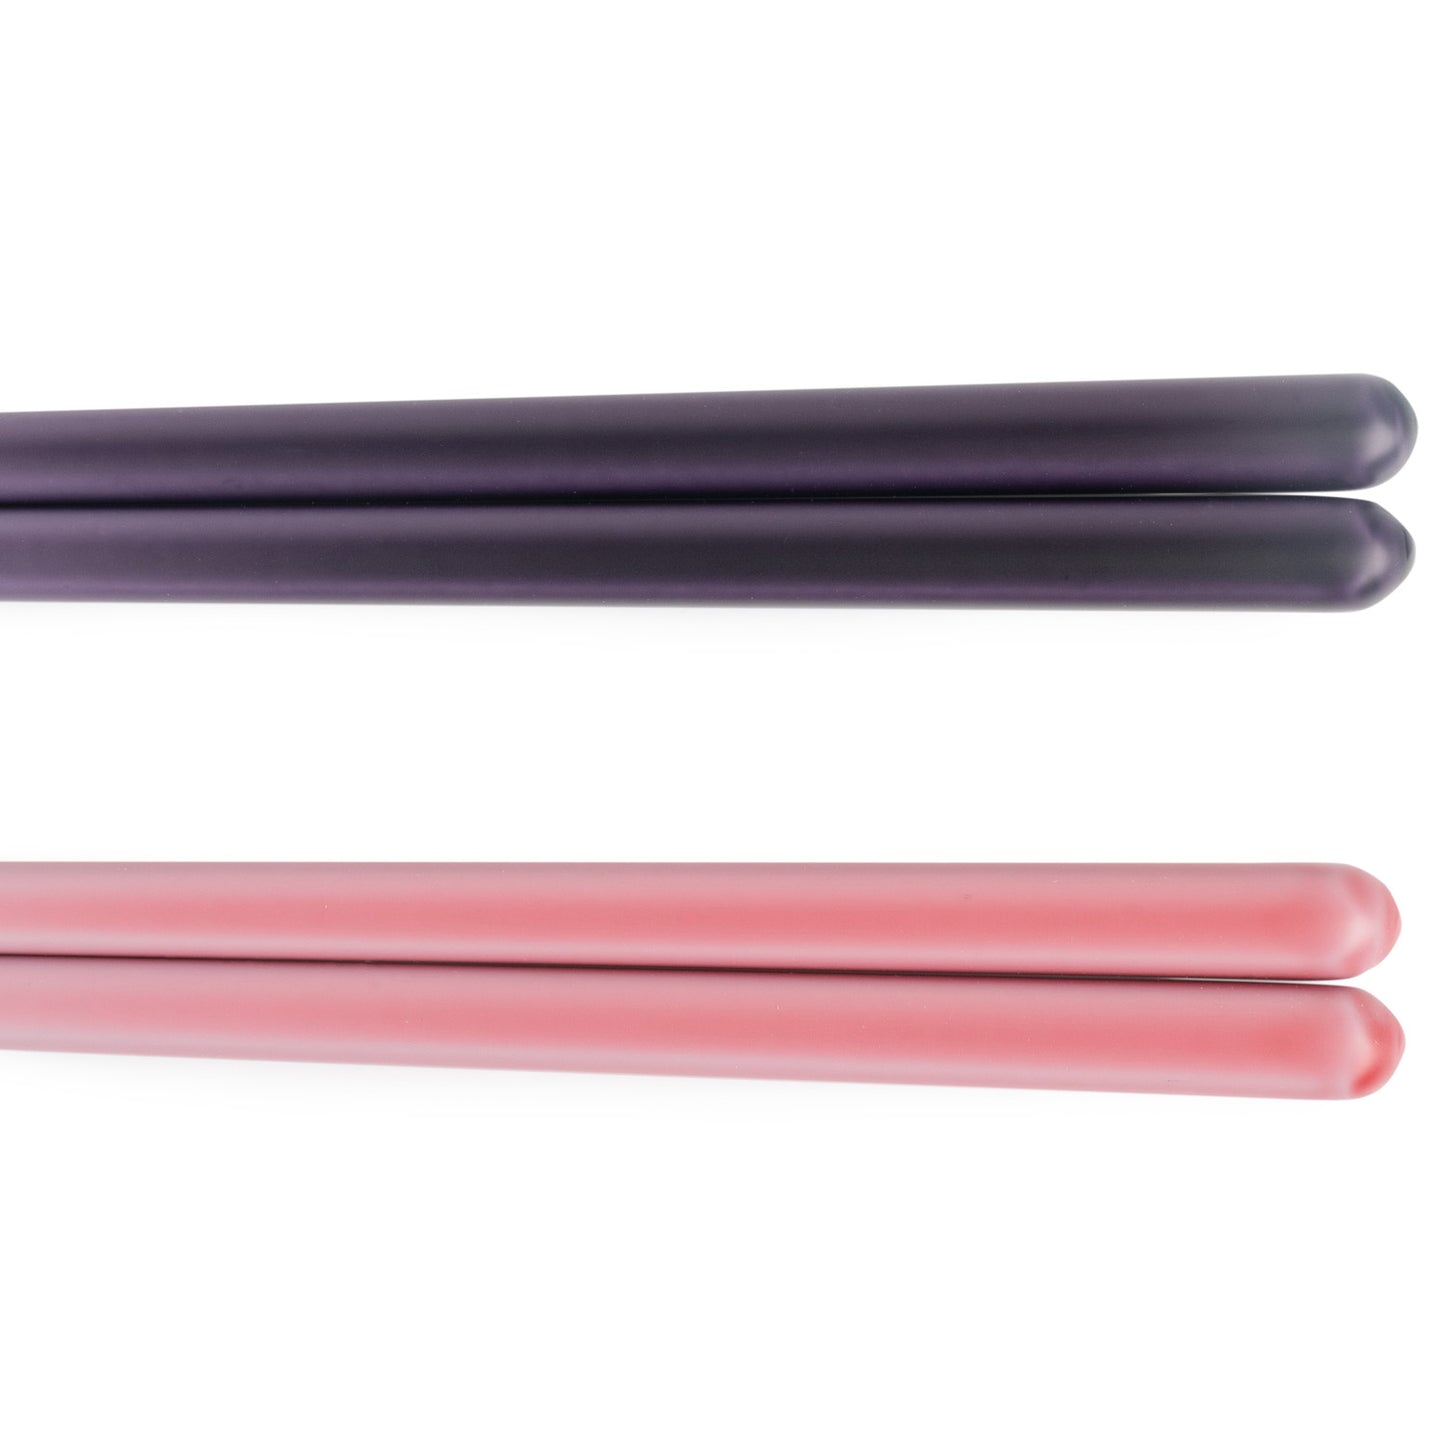 Purple and Pink Wonderful Mealtime Premium Chopstick Set handles